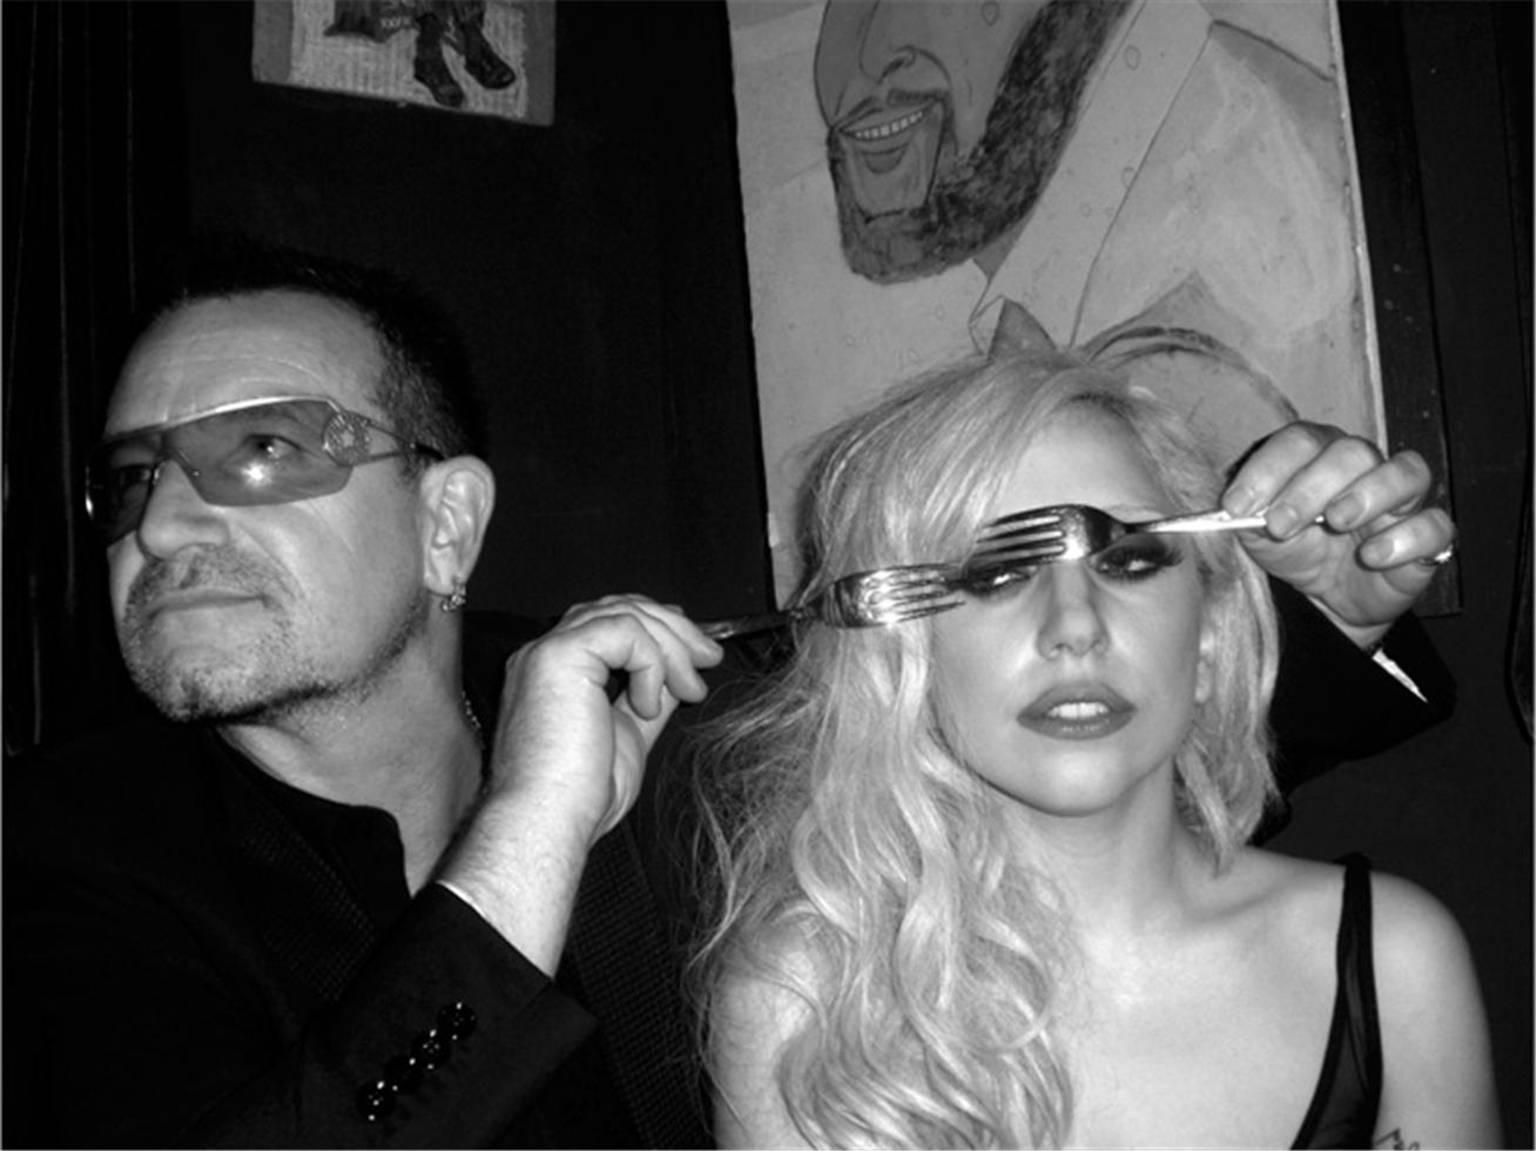 Mick Rock Black and White Photograph - Bono and Lady Gaga, 2009